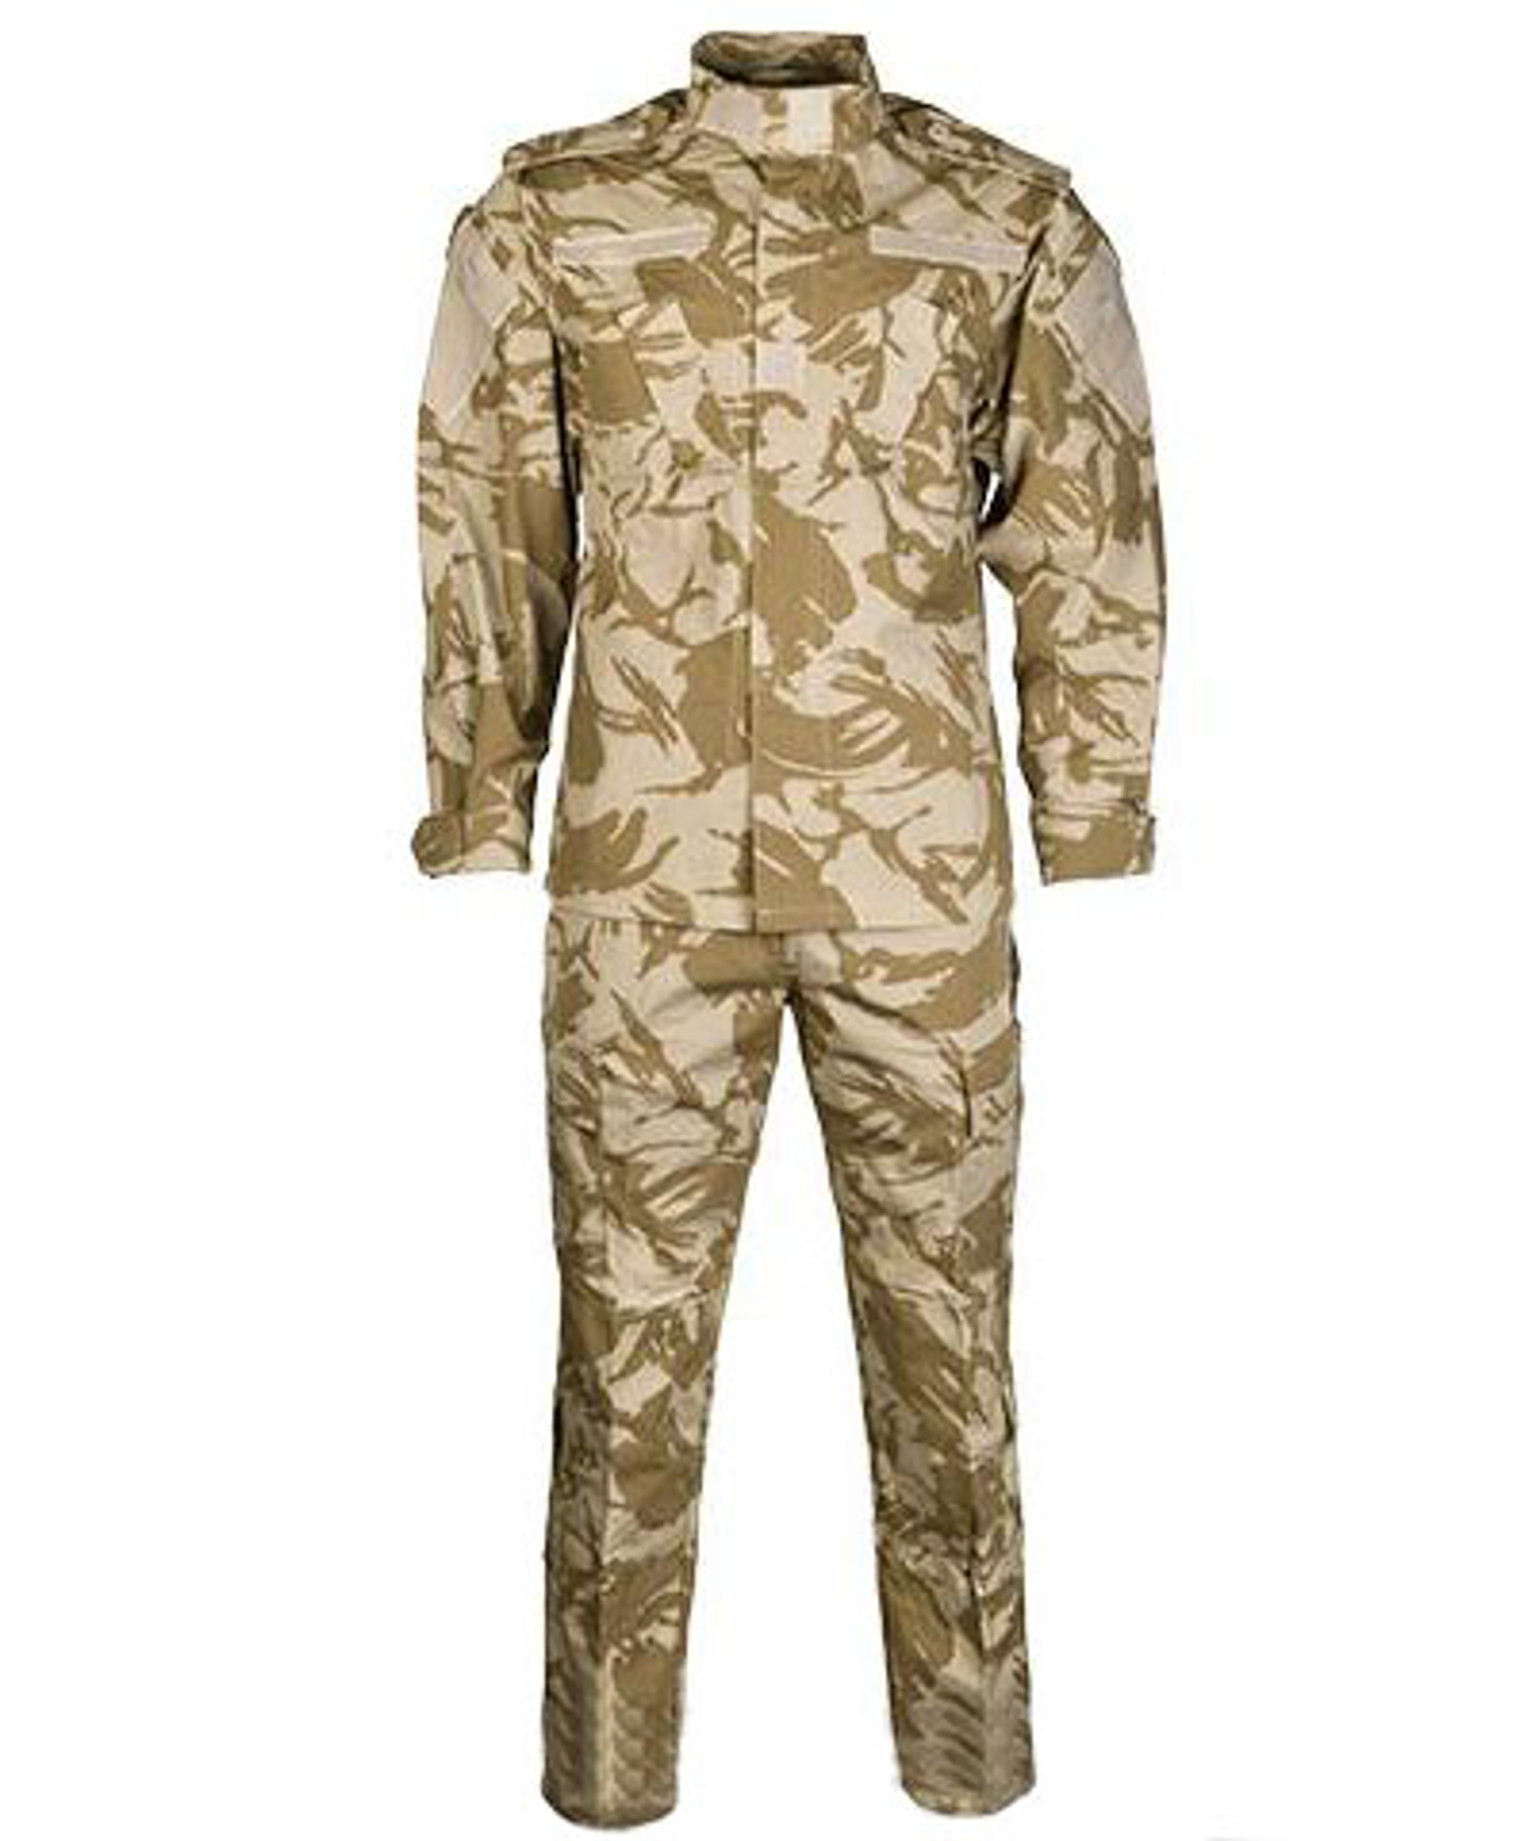 Emerson R6 BDU Field Uniform Set - Desert DPM (Size: Large)